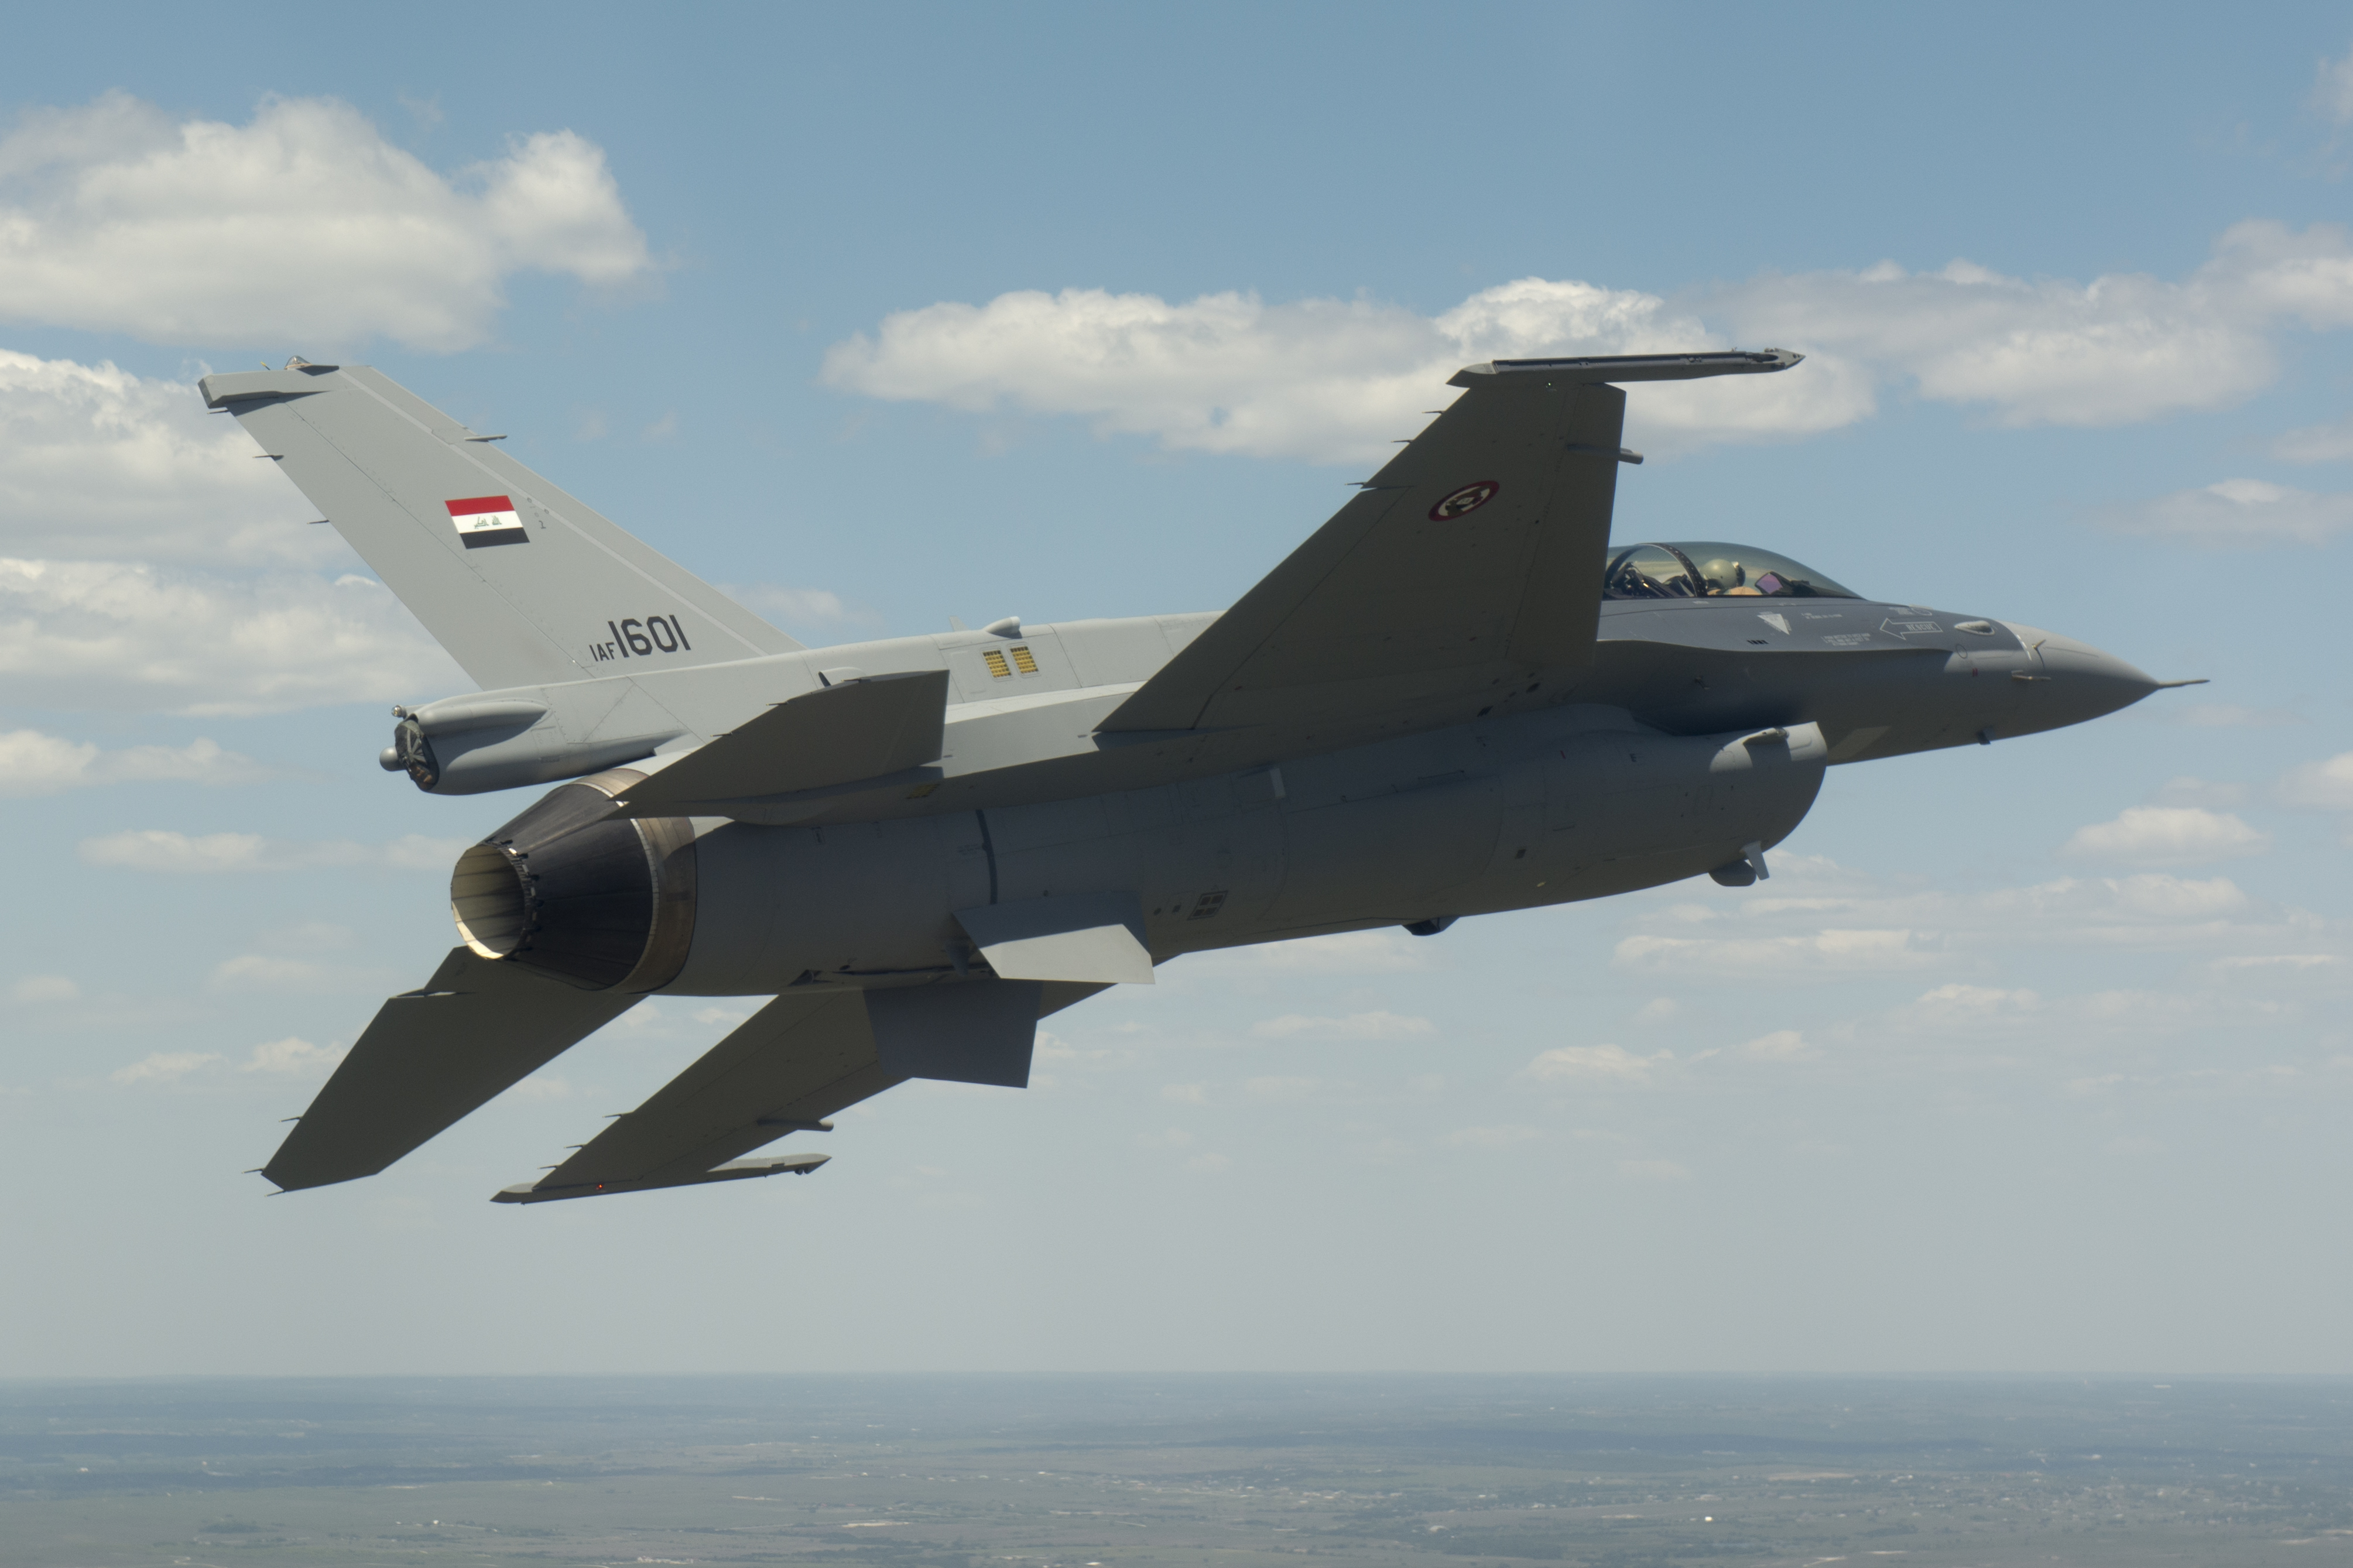 http://intercepts.defensenews.com/wp-content/uploads/2014/05/Iraq-F-16.jpg